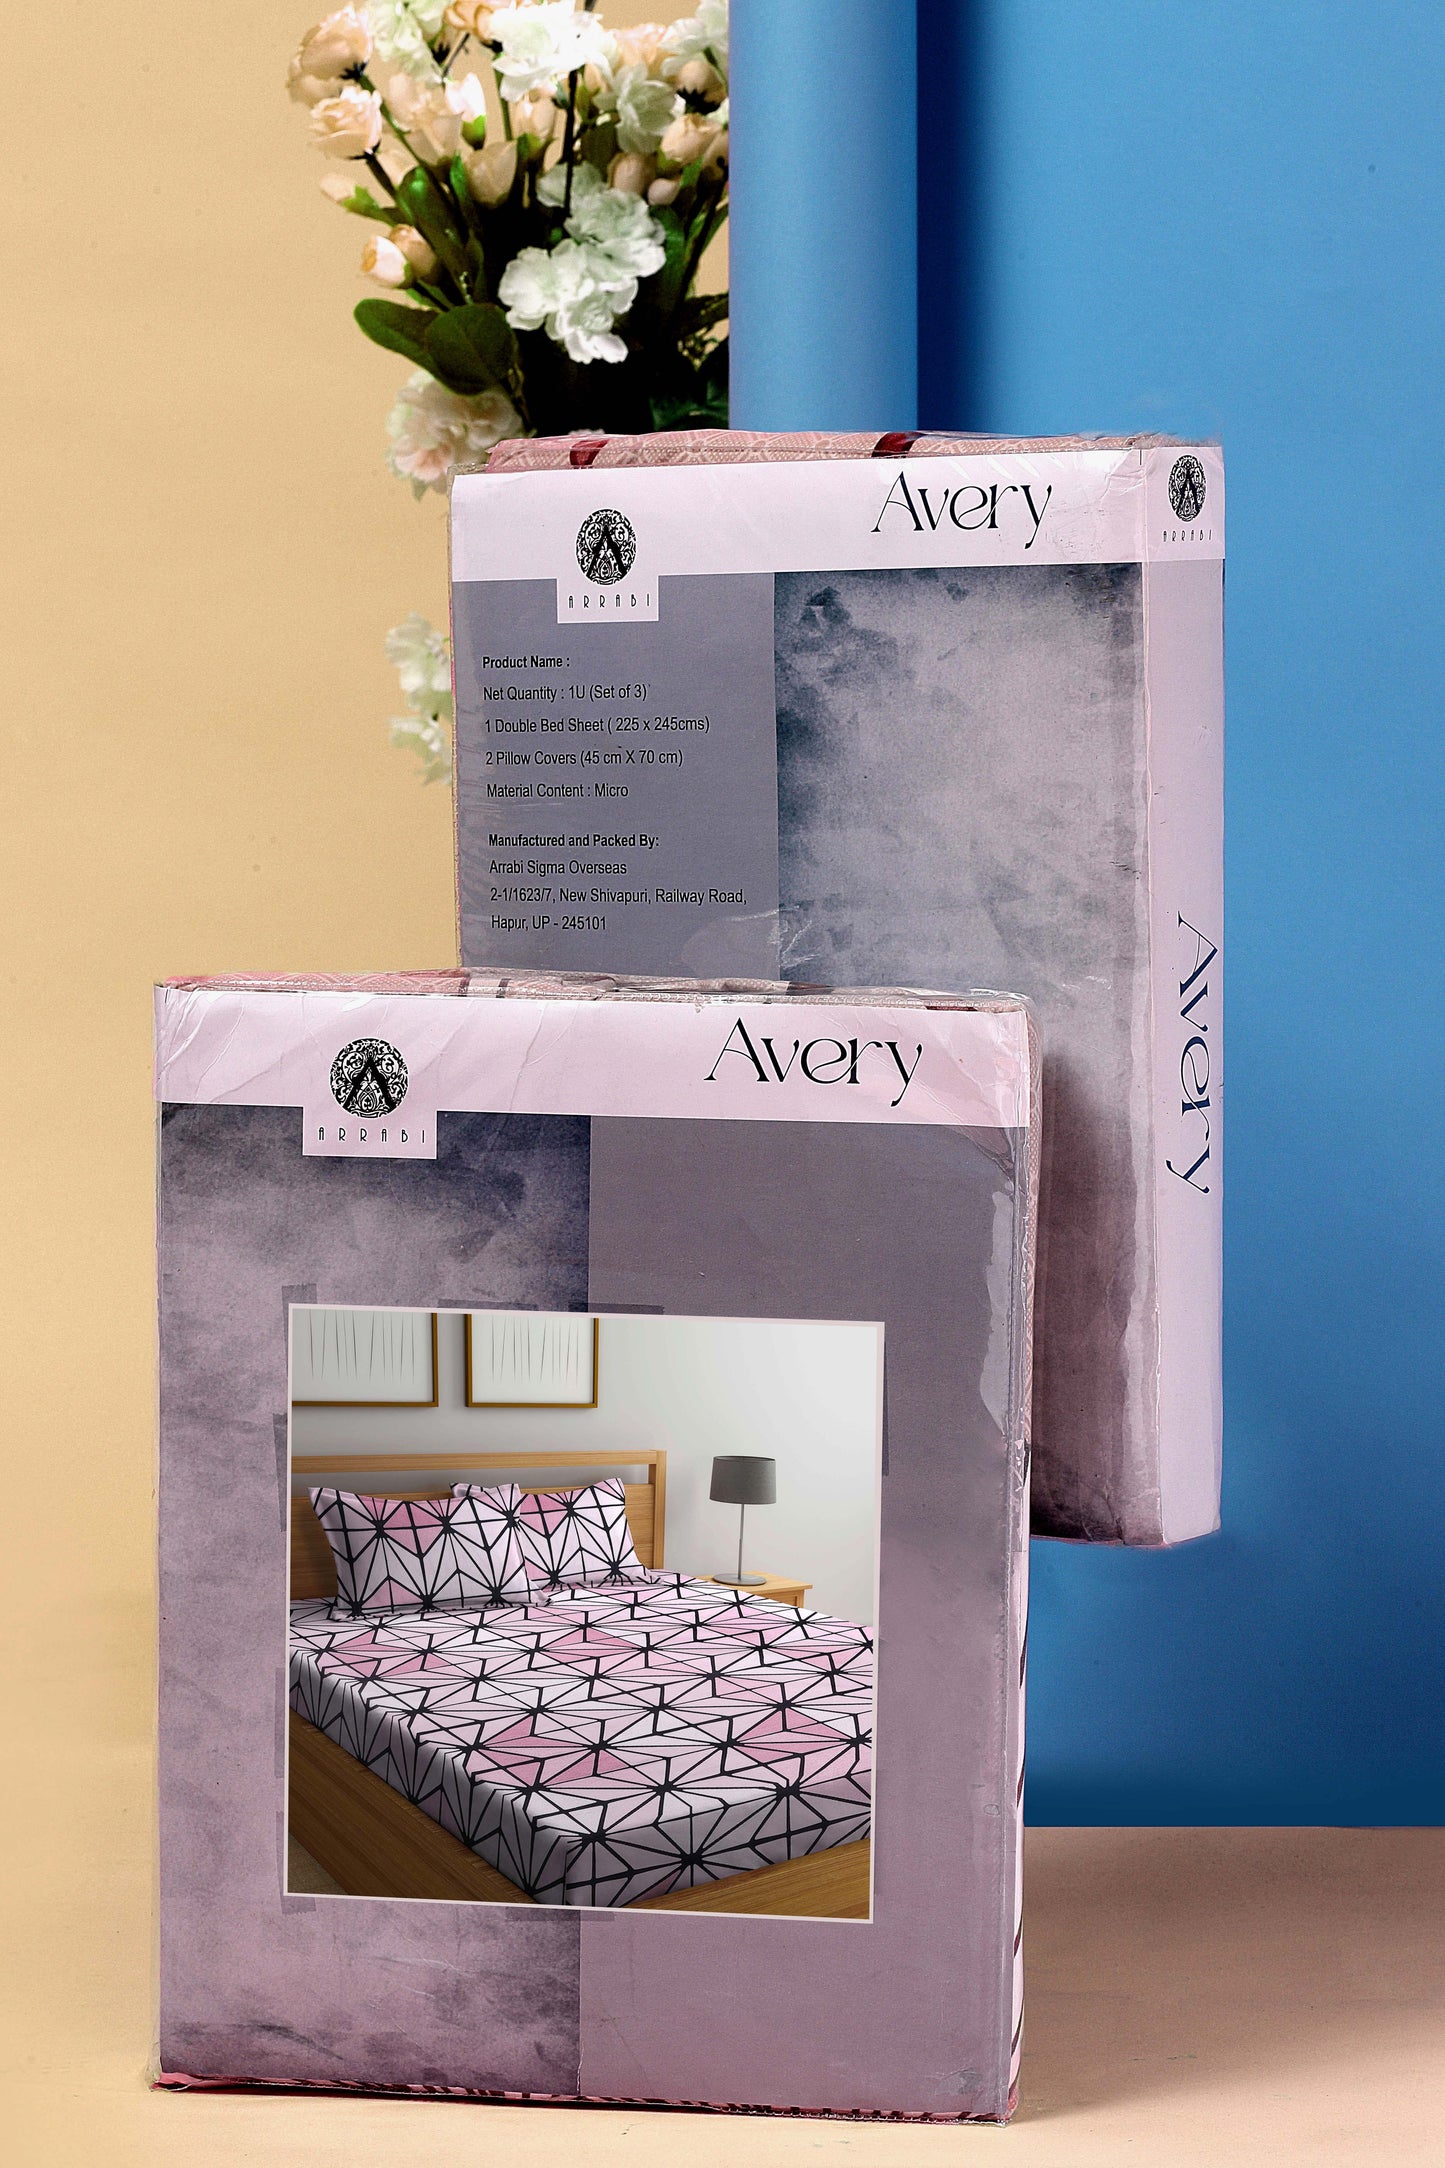 Arrabi Pink Geometric TC Cotton Blend King Size Bookfold Bedsheet with 2 Pillow Covers (250 X 220 cm)